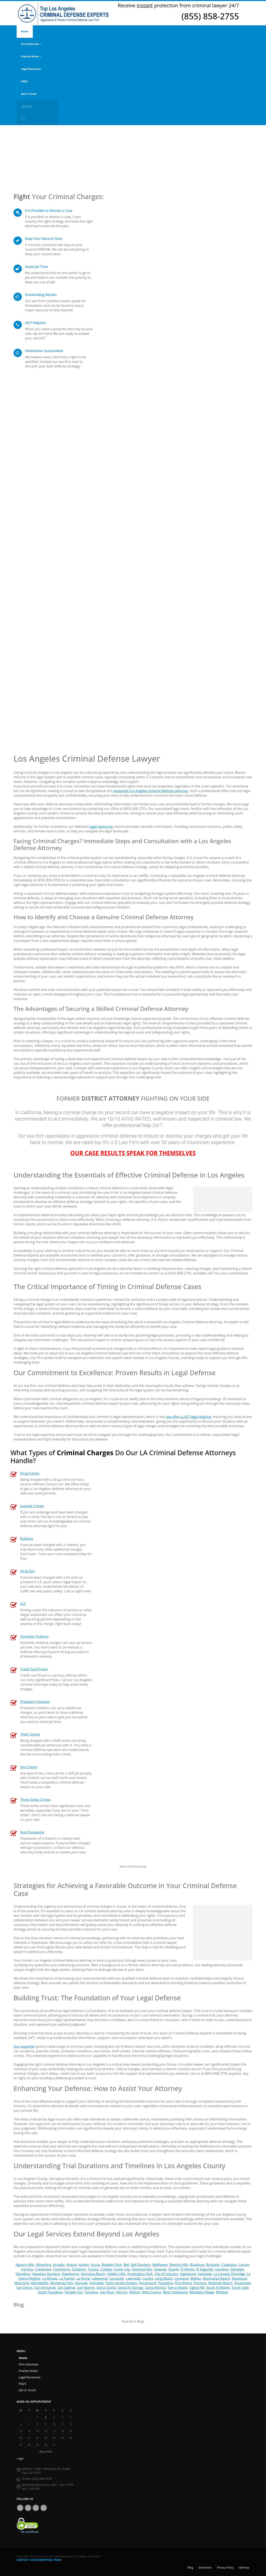 Los Angeles Criminal Experts - Van Nuys CA Lawyers